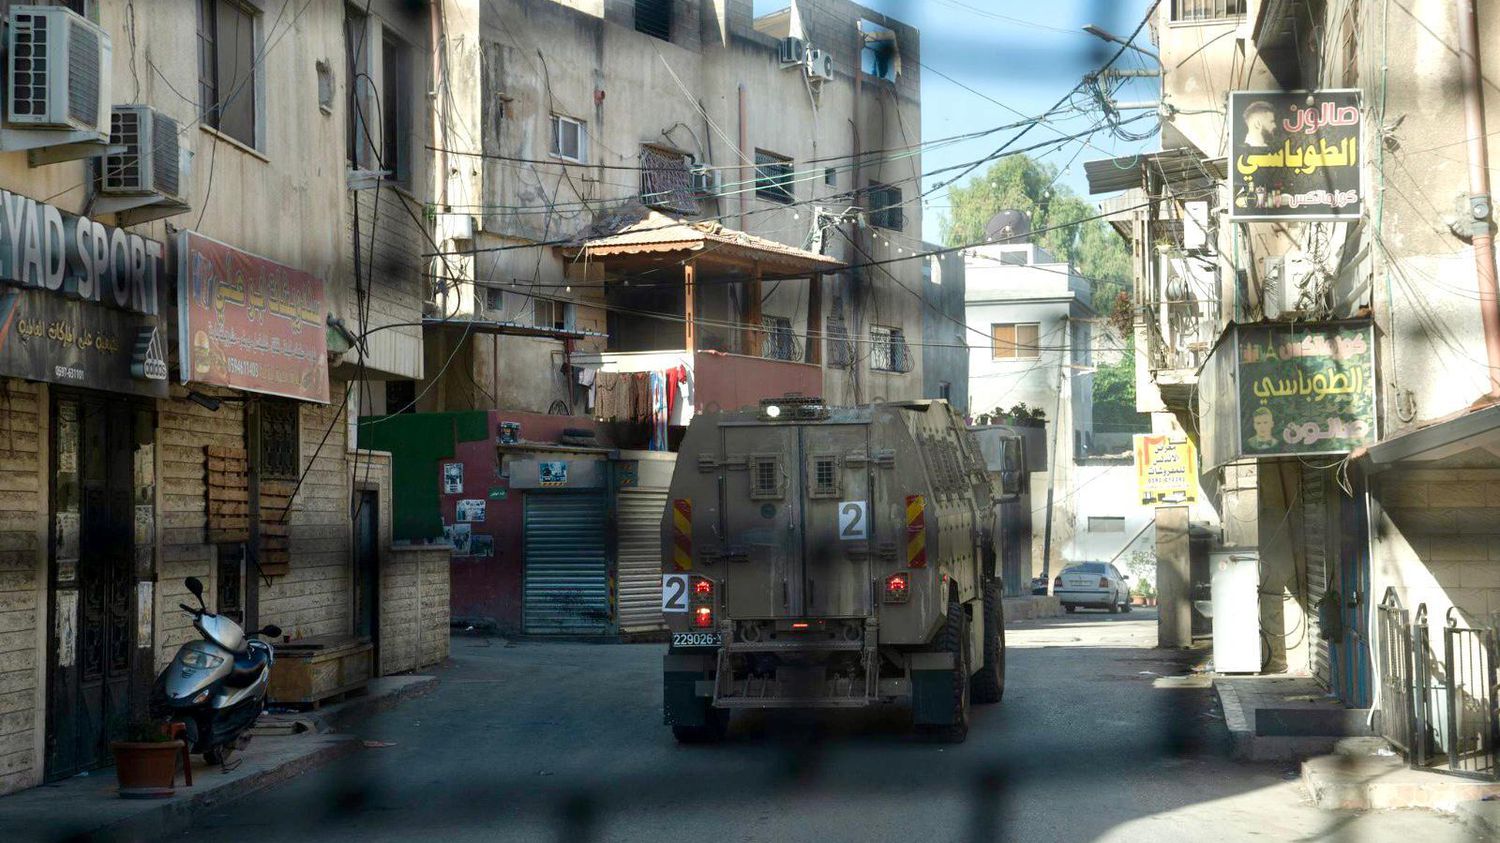 West Bank: Three Palestinians killed in Israeli raid in Jenin
